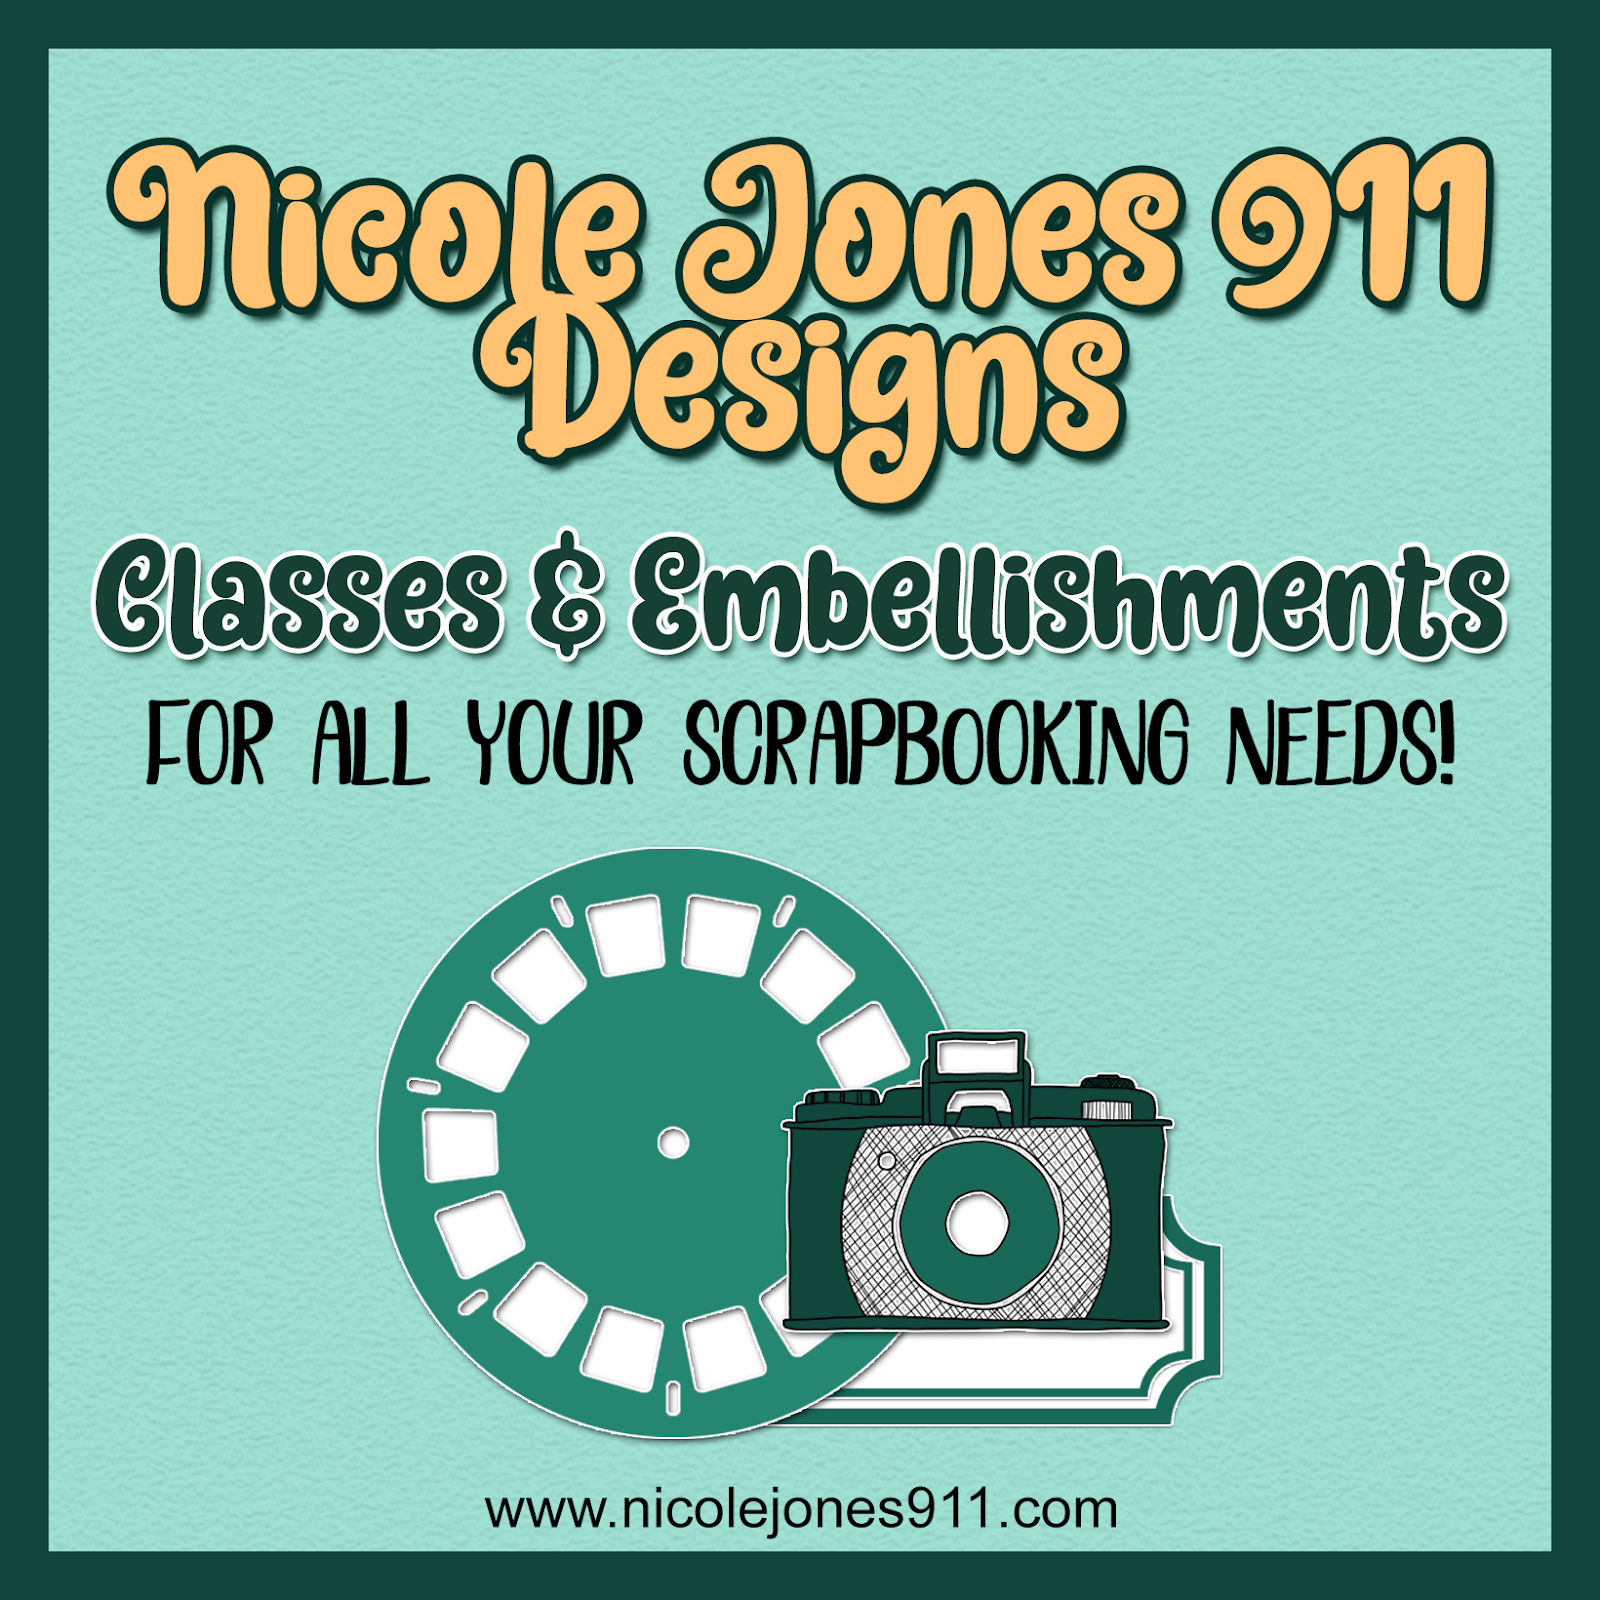 Nicole Jones 911 Designs